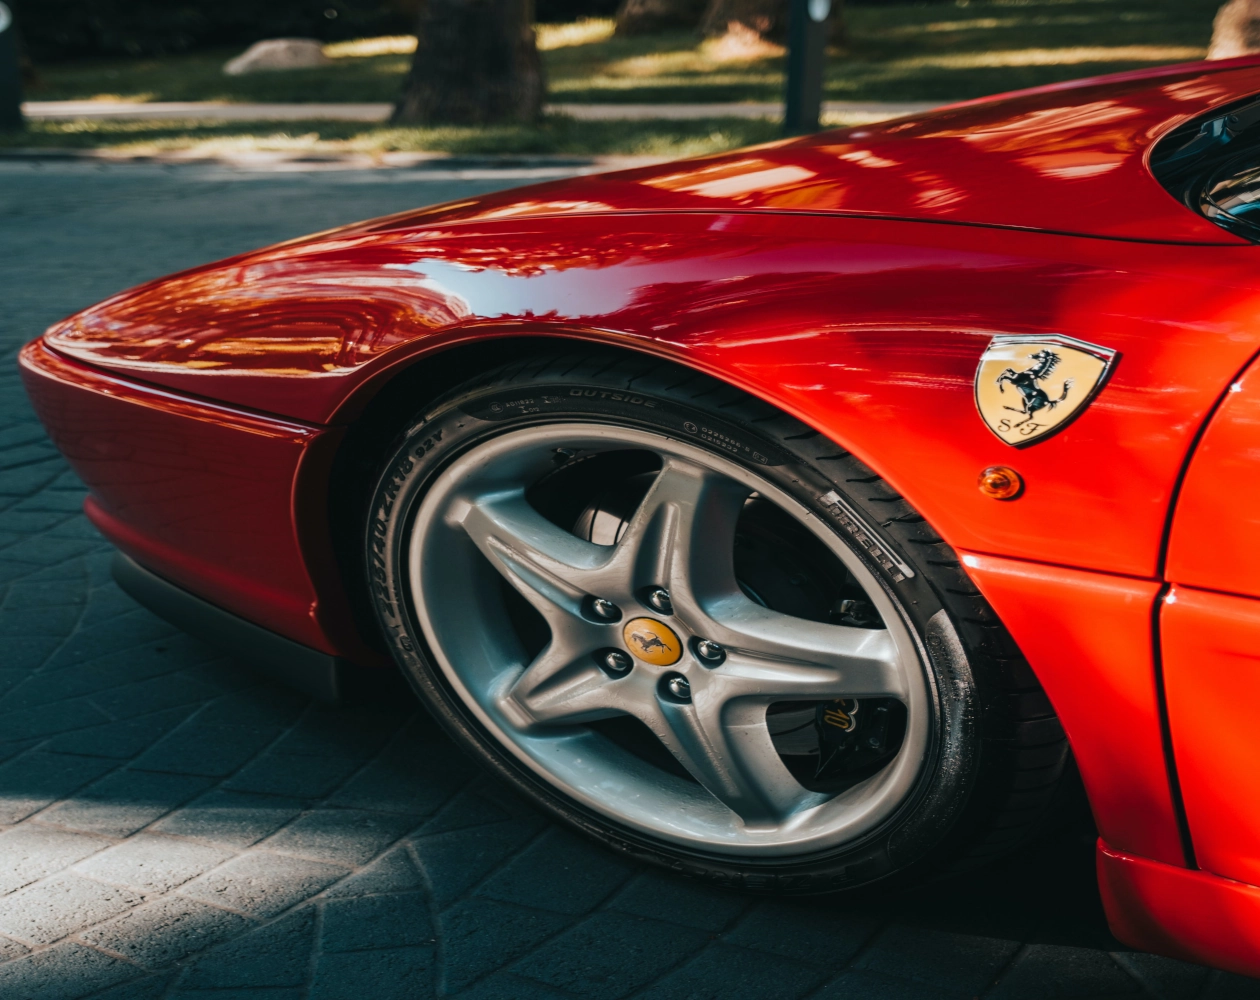  Cariology auto detailed Ferrari